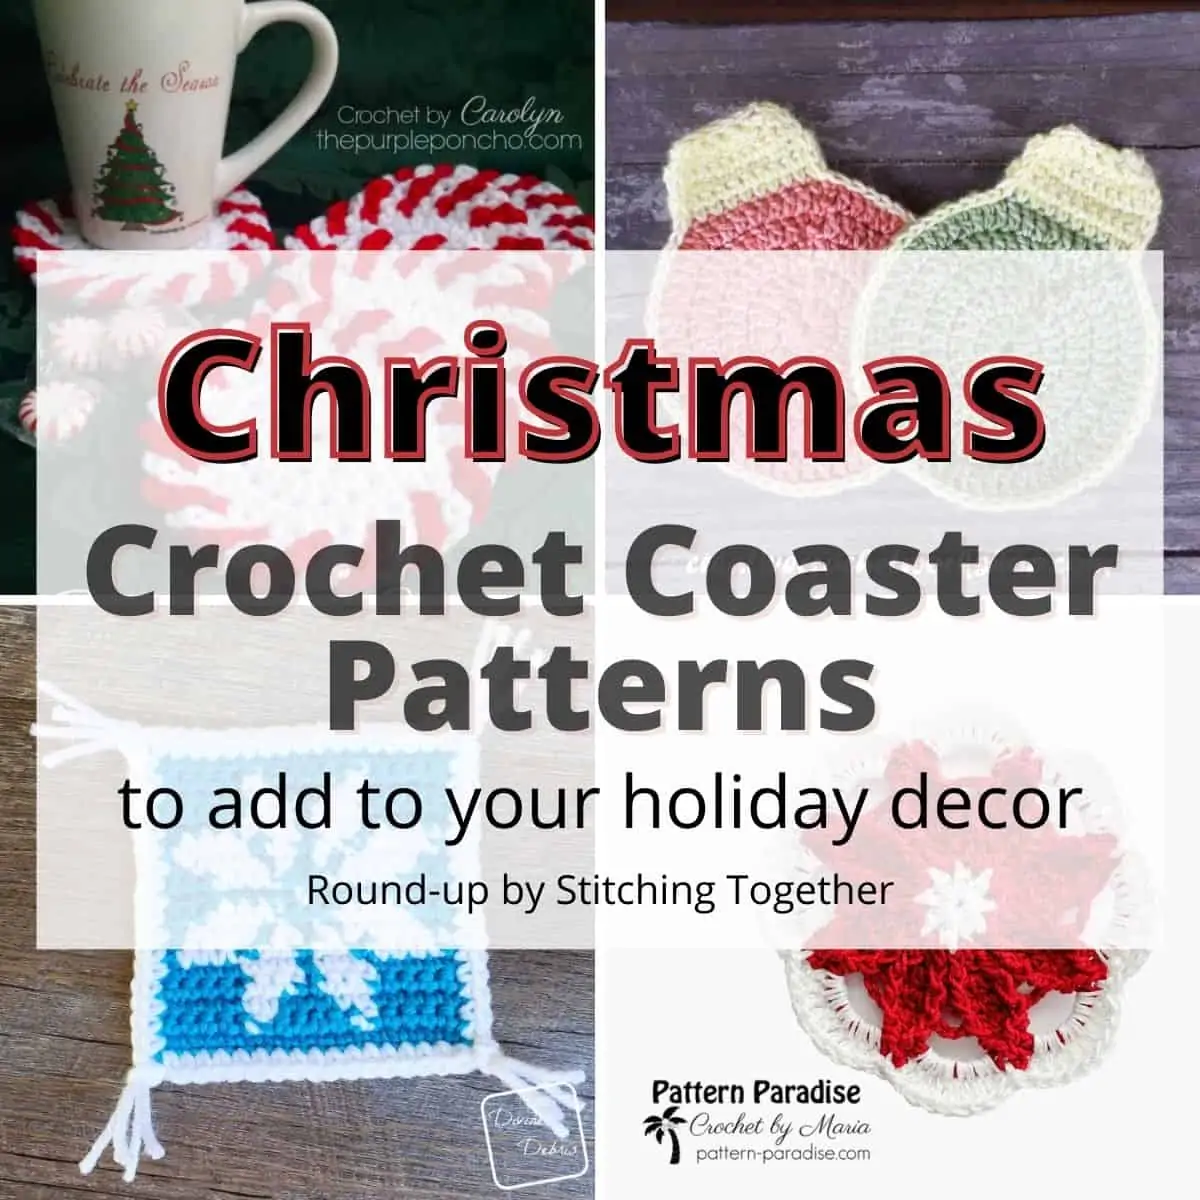 Crochet Christmas Coasters